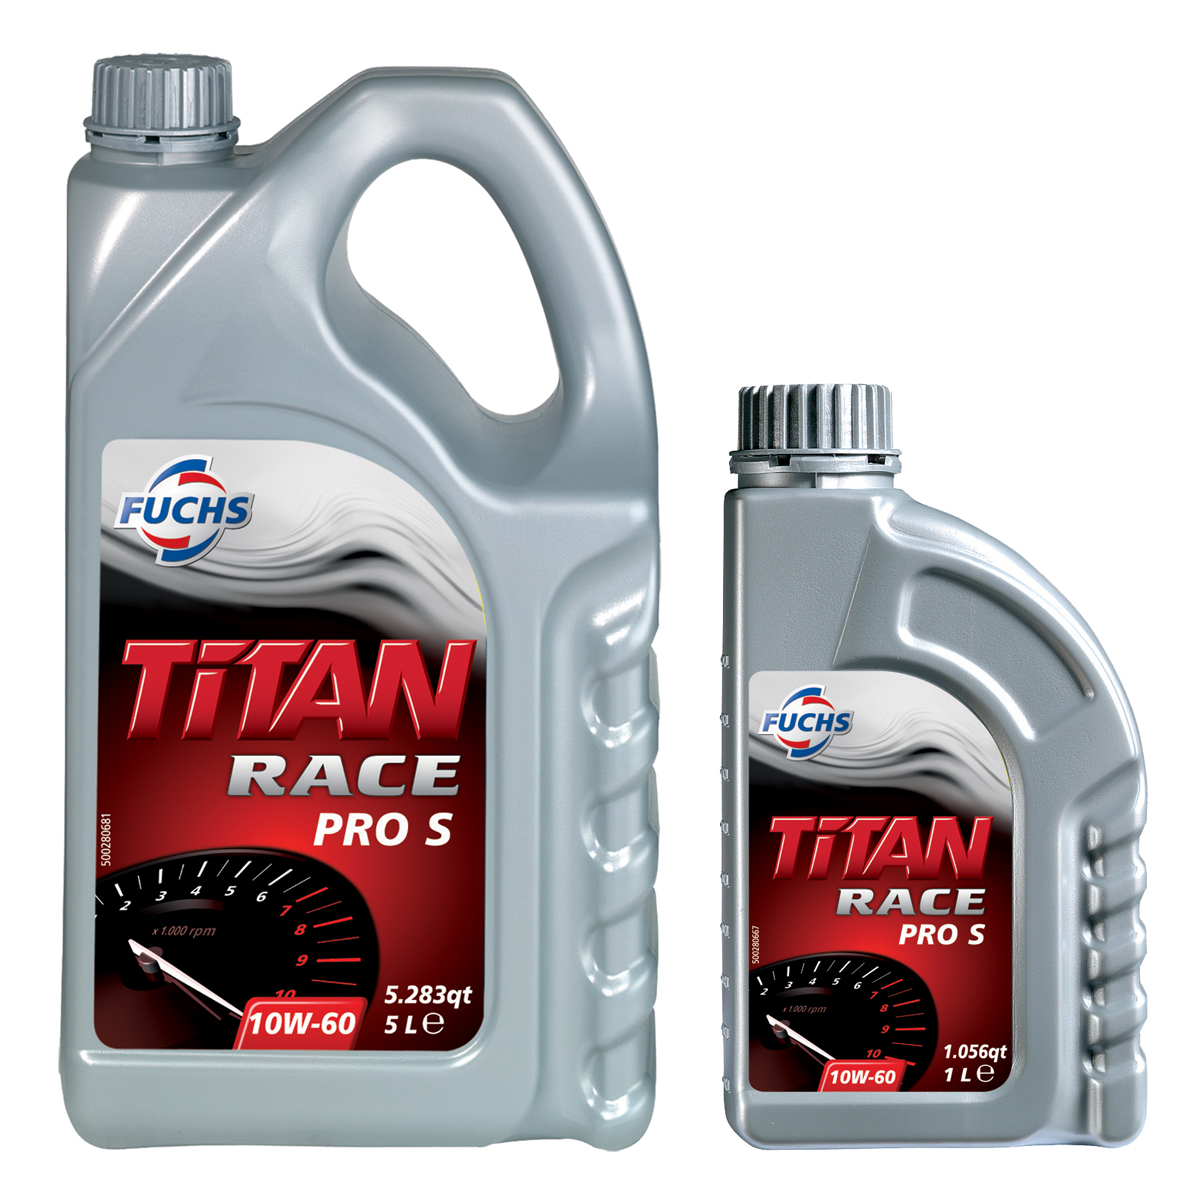 Fuchs Titan Race Pro S 10W60 Fully Synthetic Engine Oil - 1 Litre